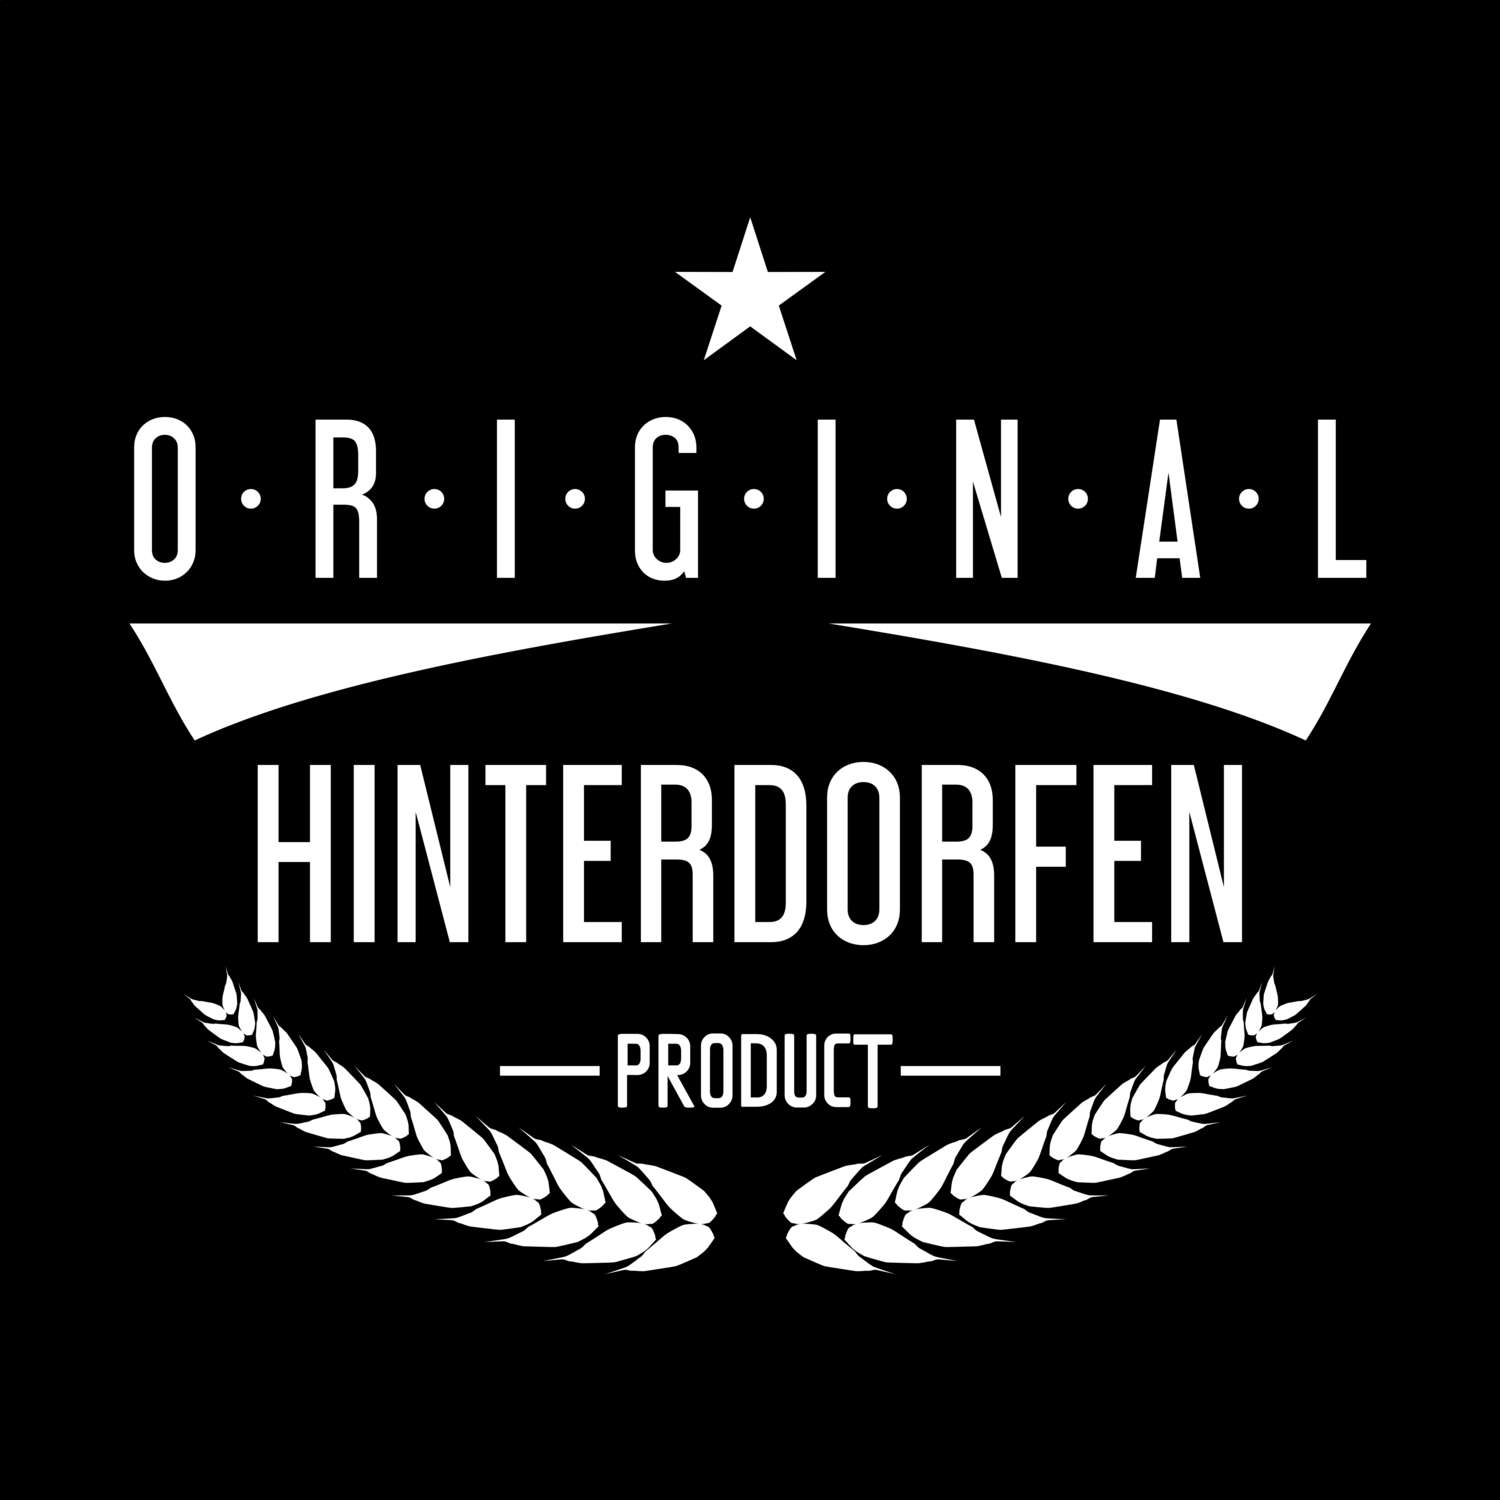 Hinterdorfen T-Shirt »Original Product«